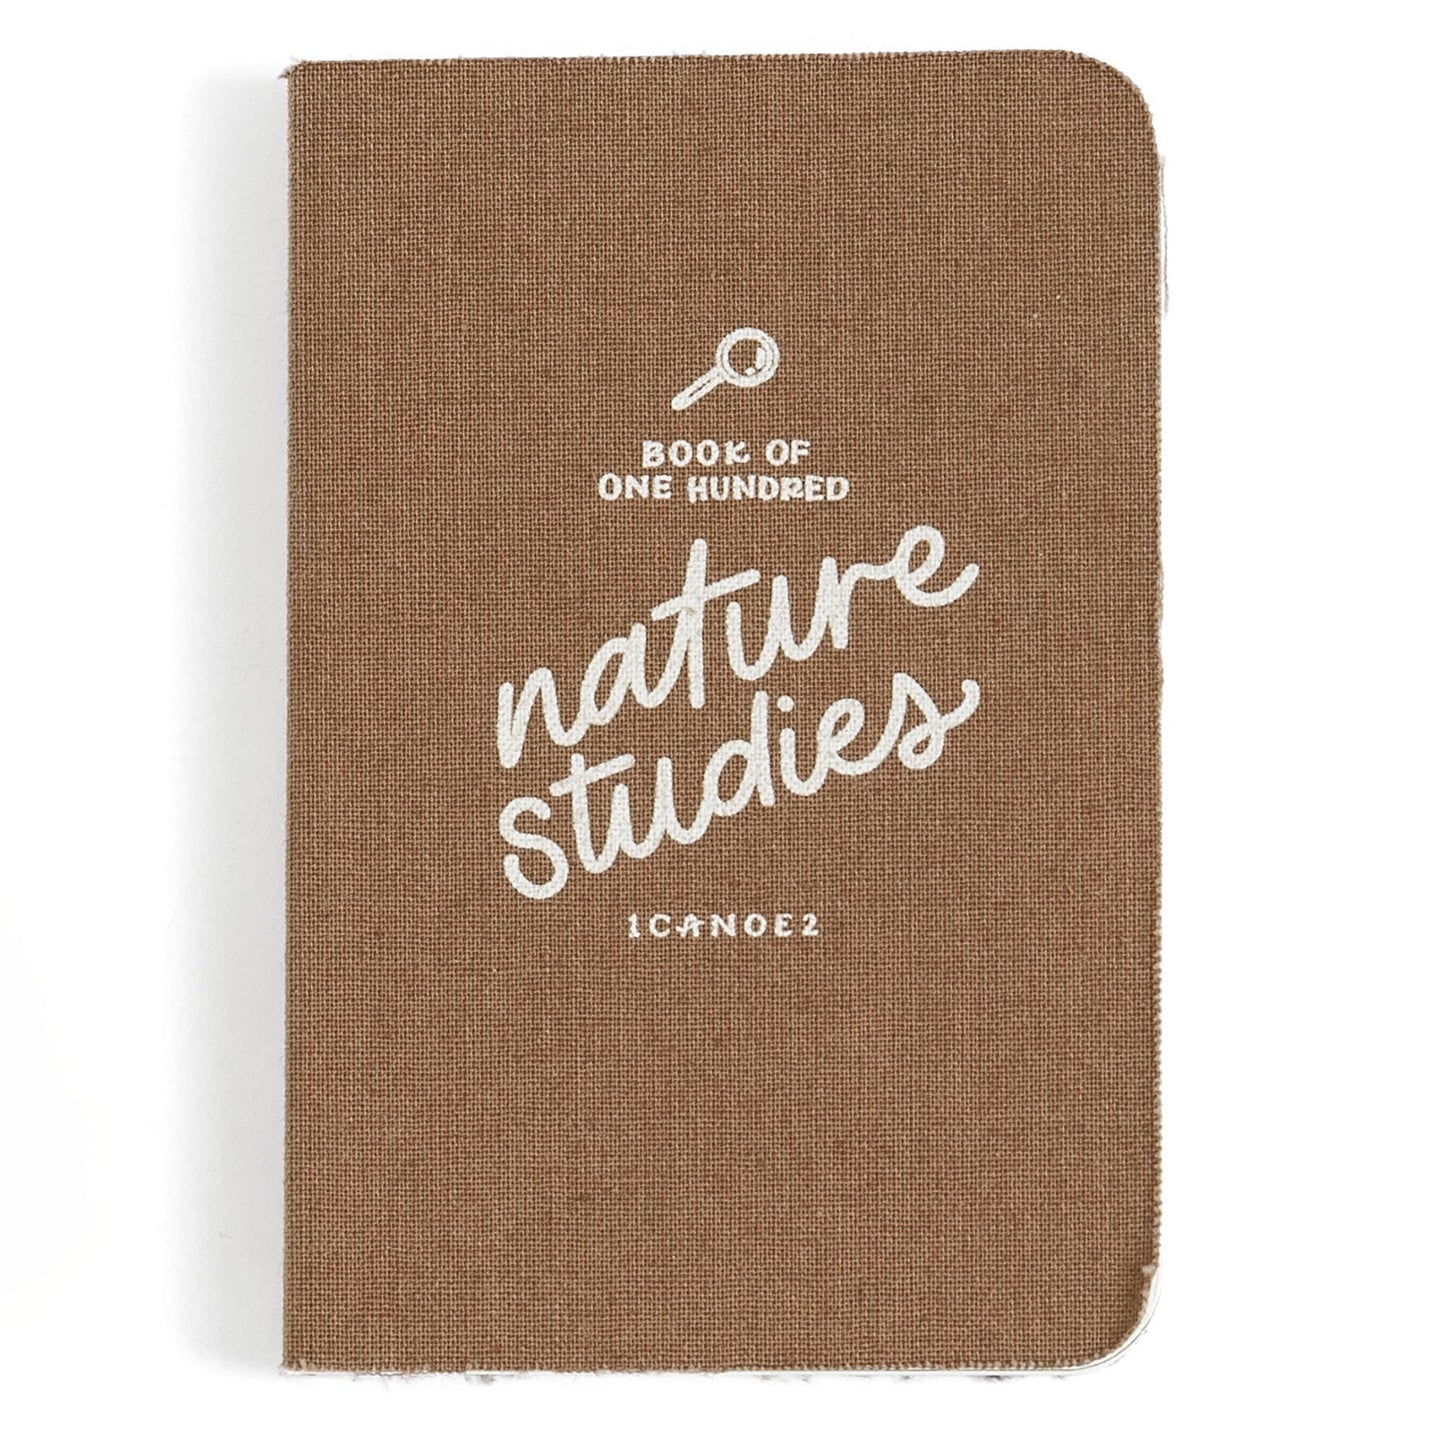 One Hundred Nature Studies Journal